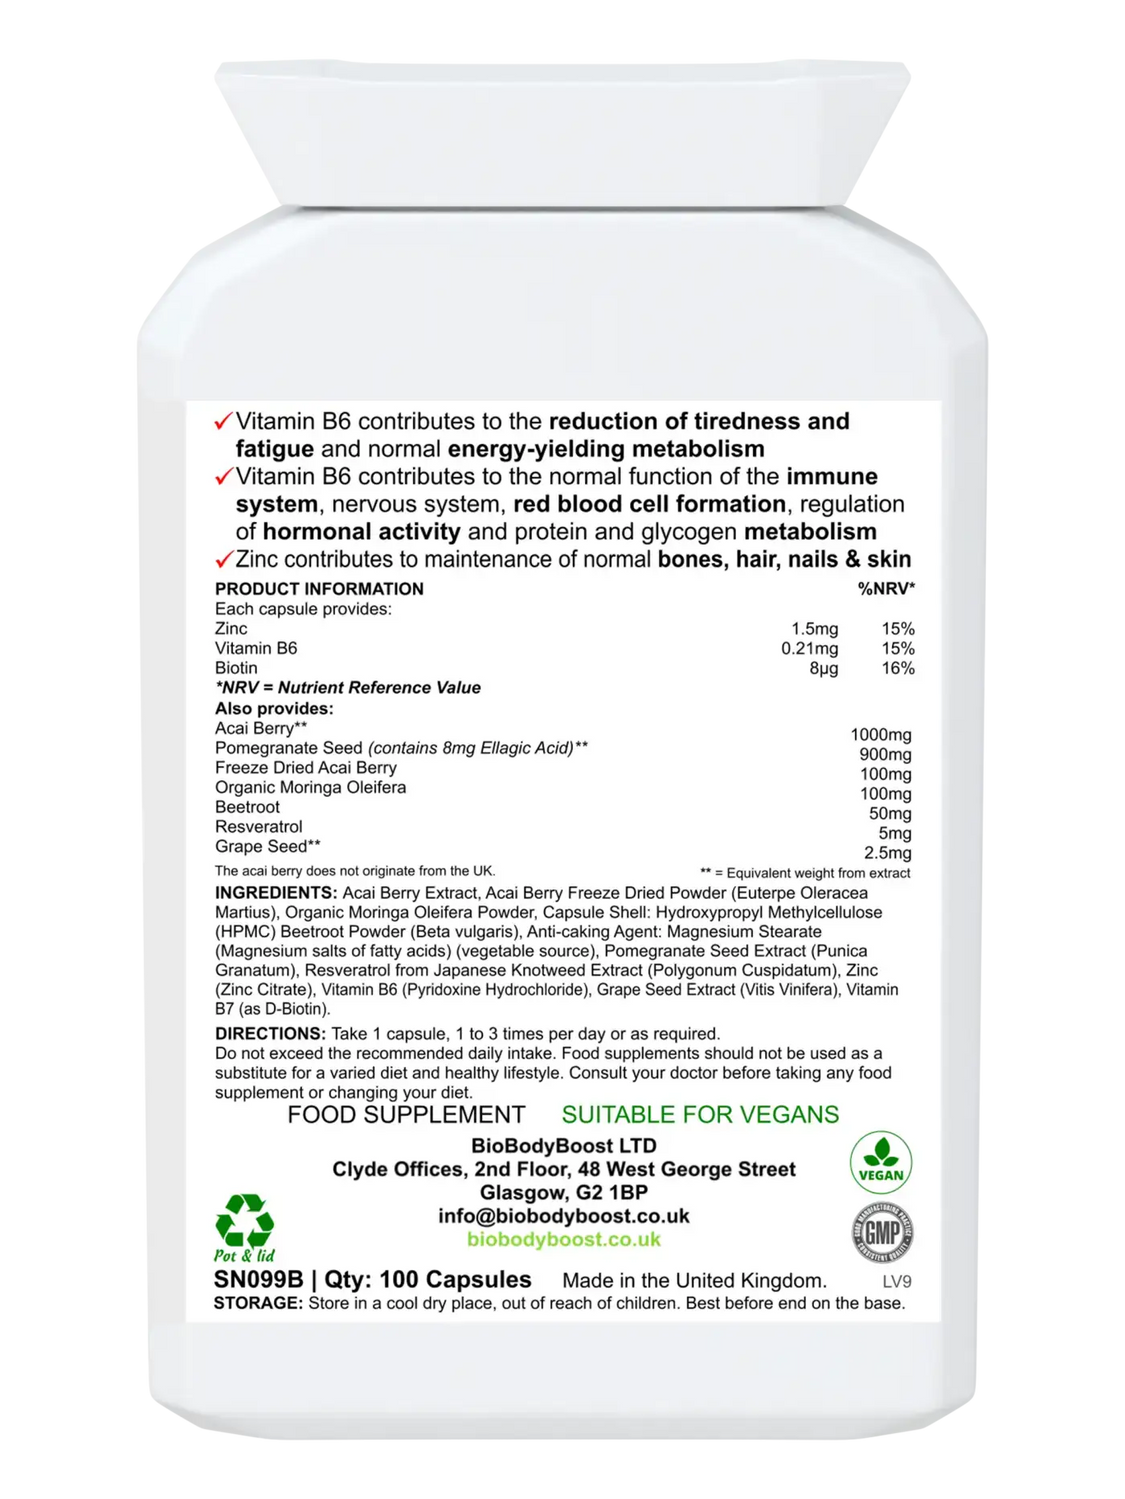 Immunity Booster Supplements | Acai Bio Complex | BioBodyBoost